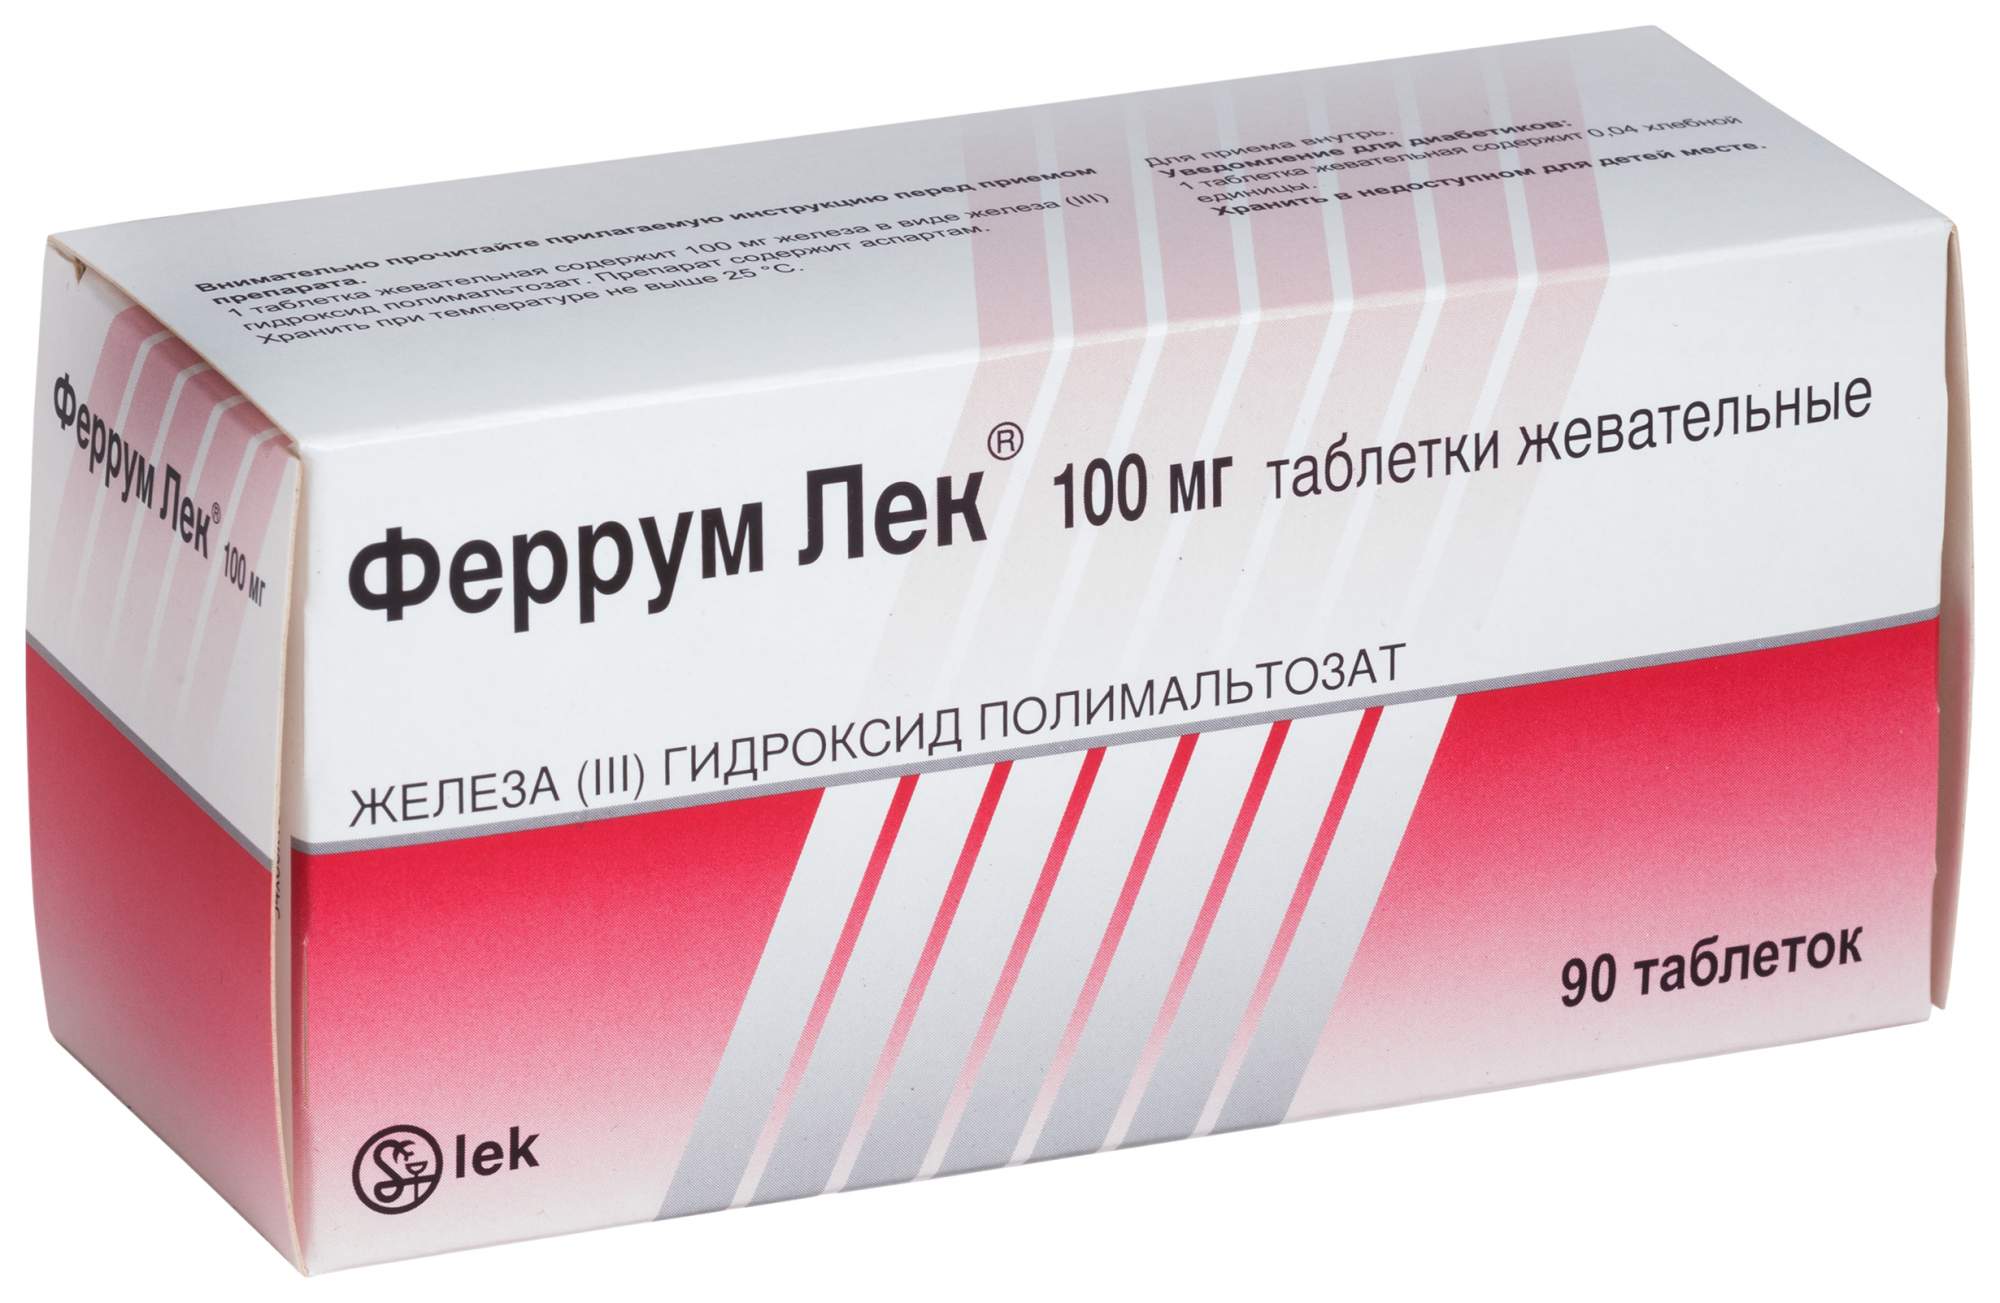 Феррум Лек таблетки жев.100 мг №90 - отзывы покупателей на Мегамаркет